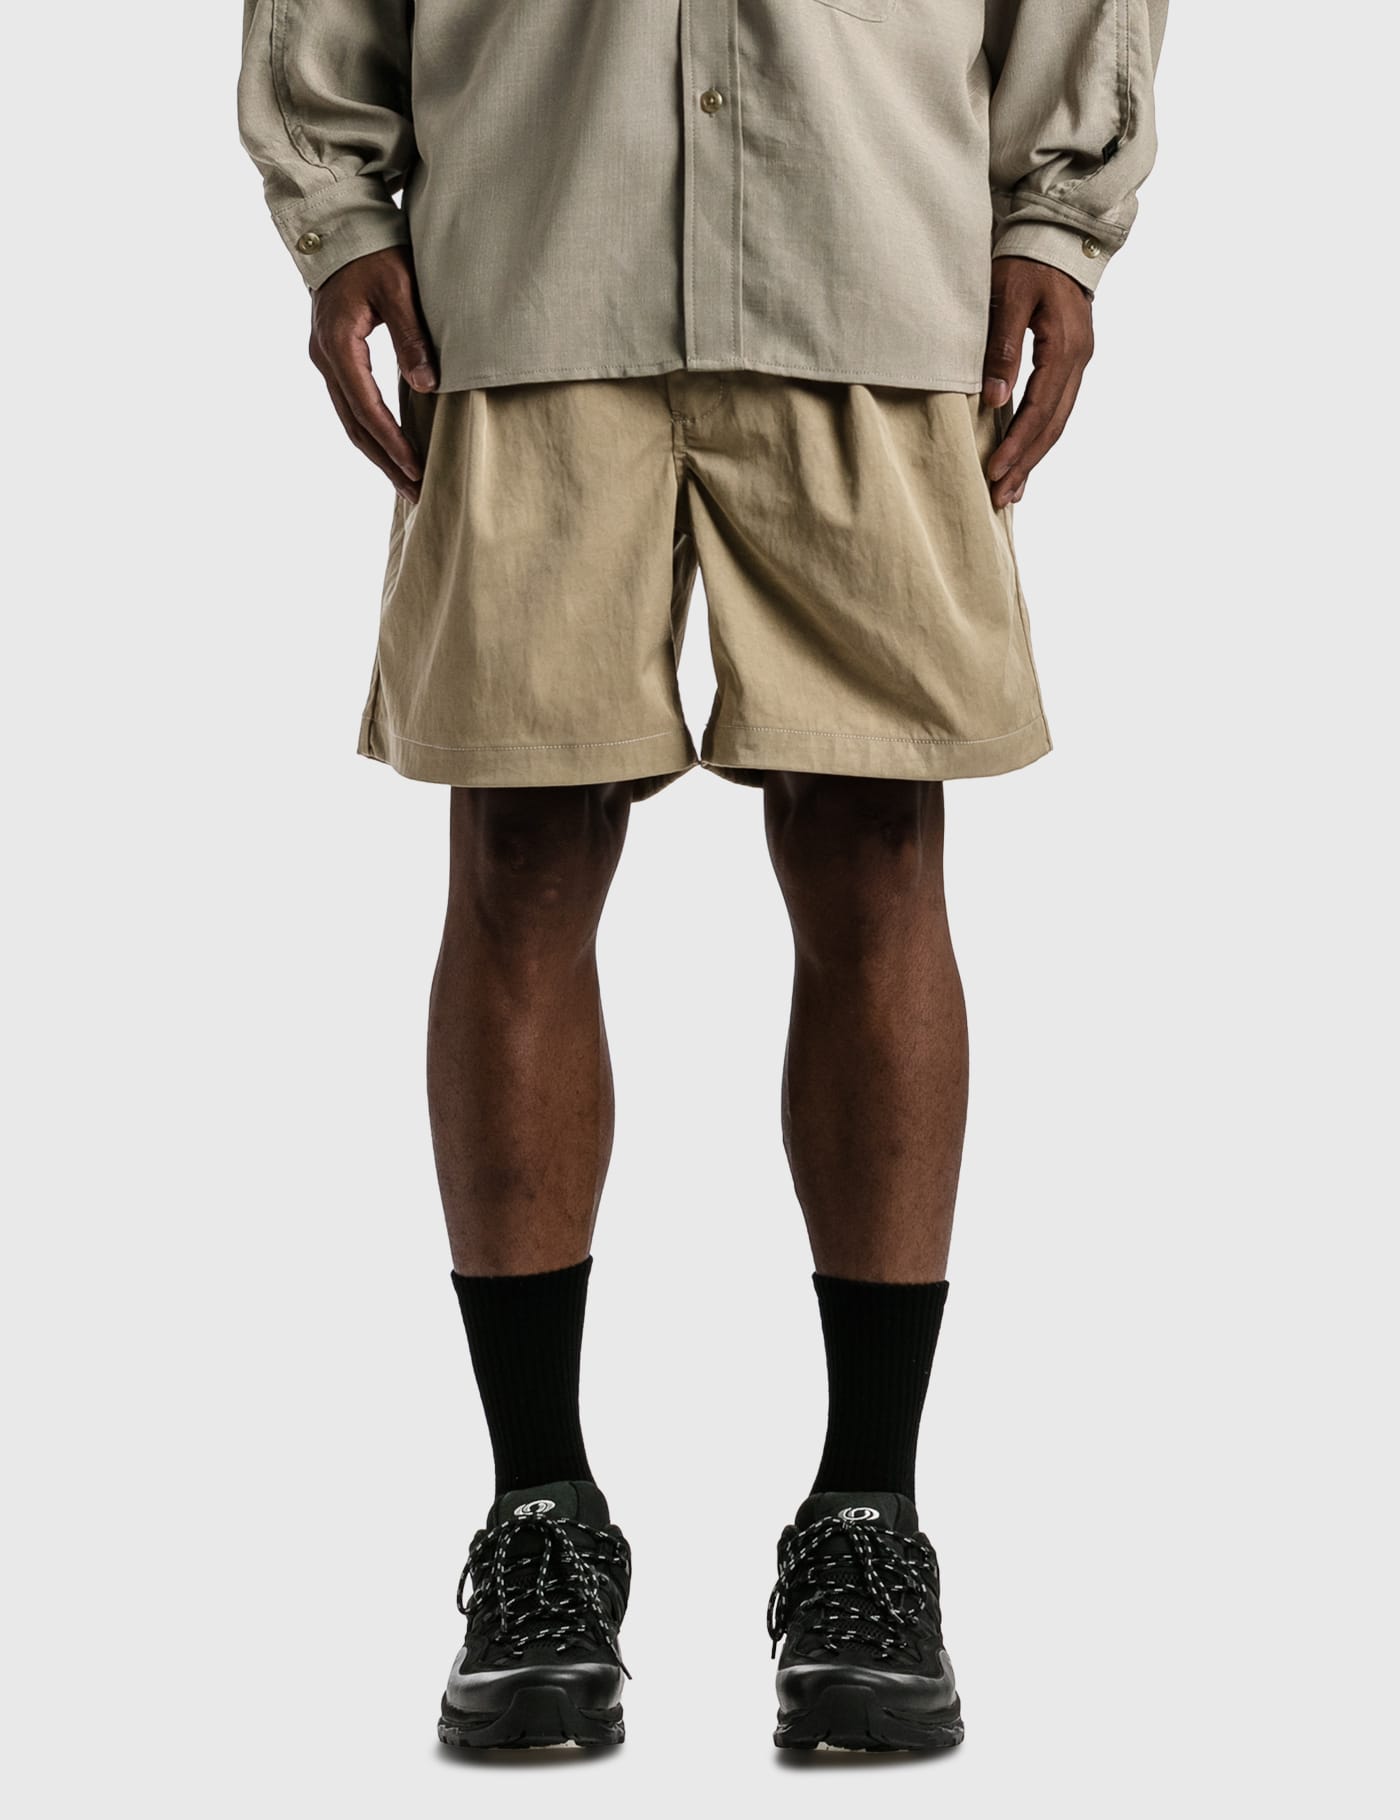 DAIWA PIER39 - Tech Easy Shorts | HBX - HYPEBEAST 为您搜罗全球潮流